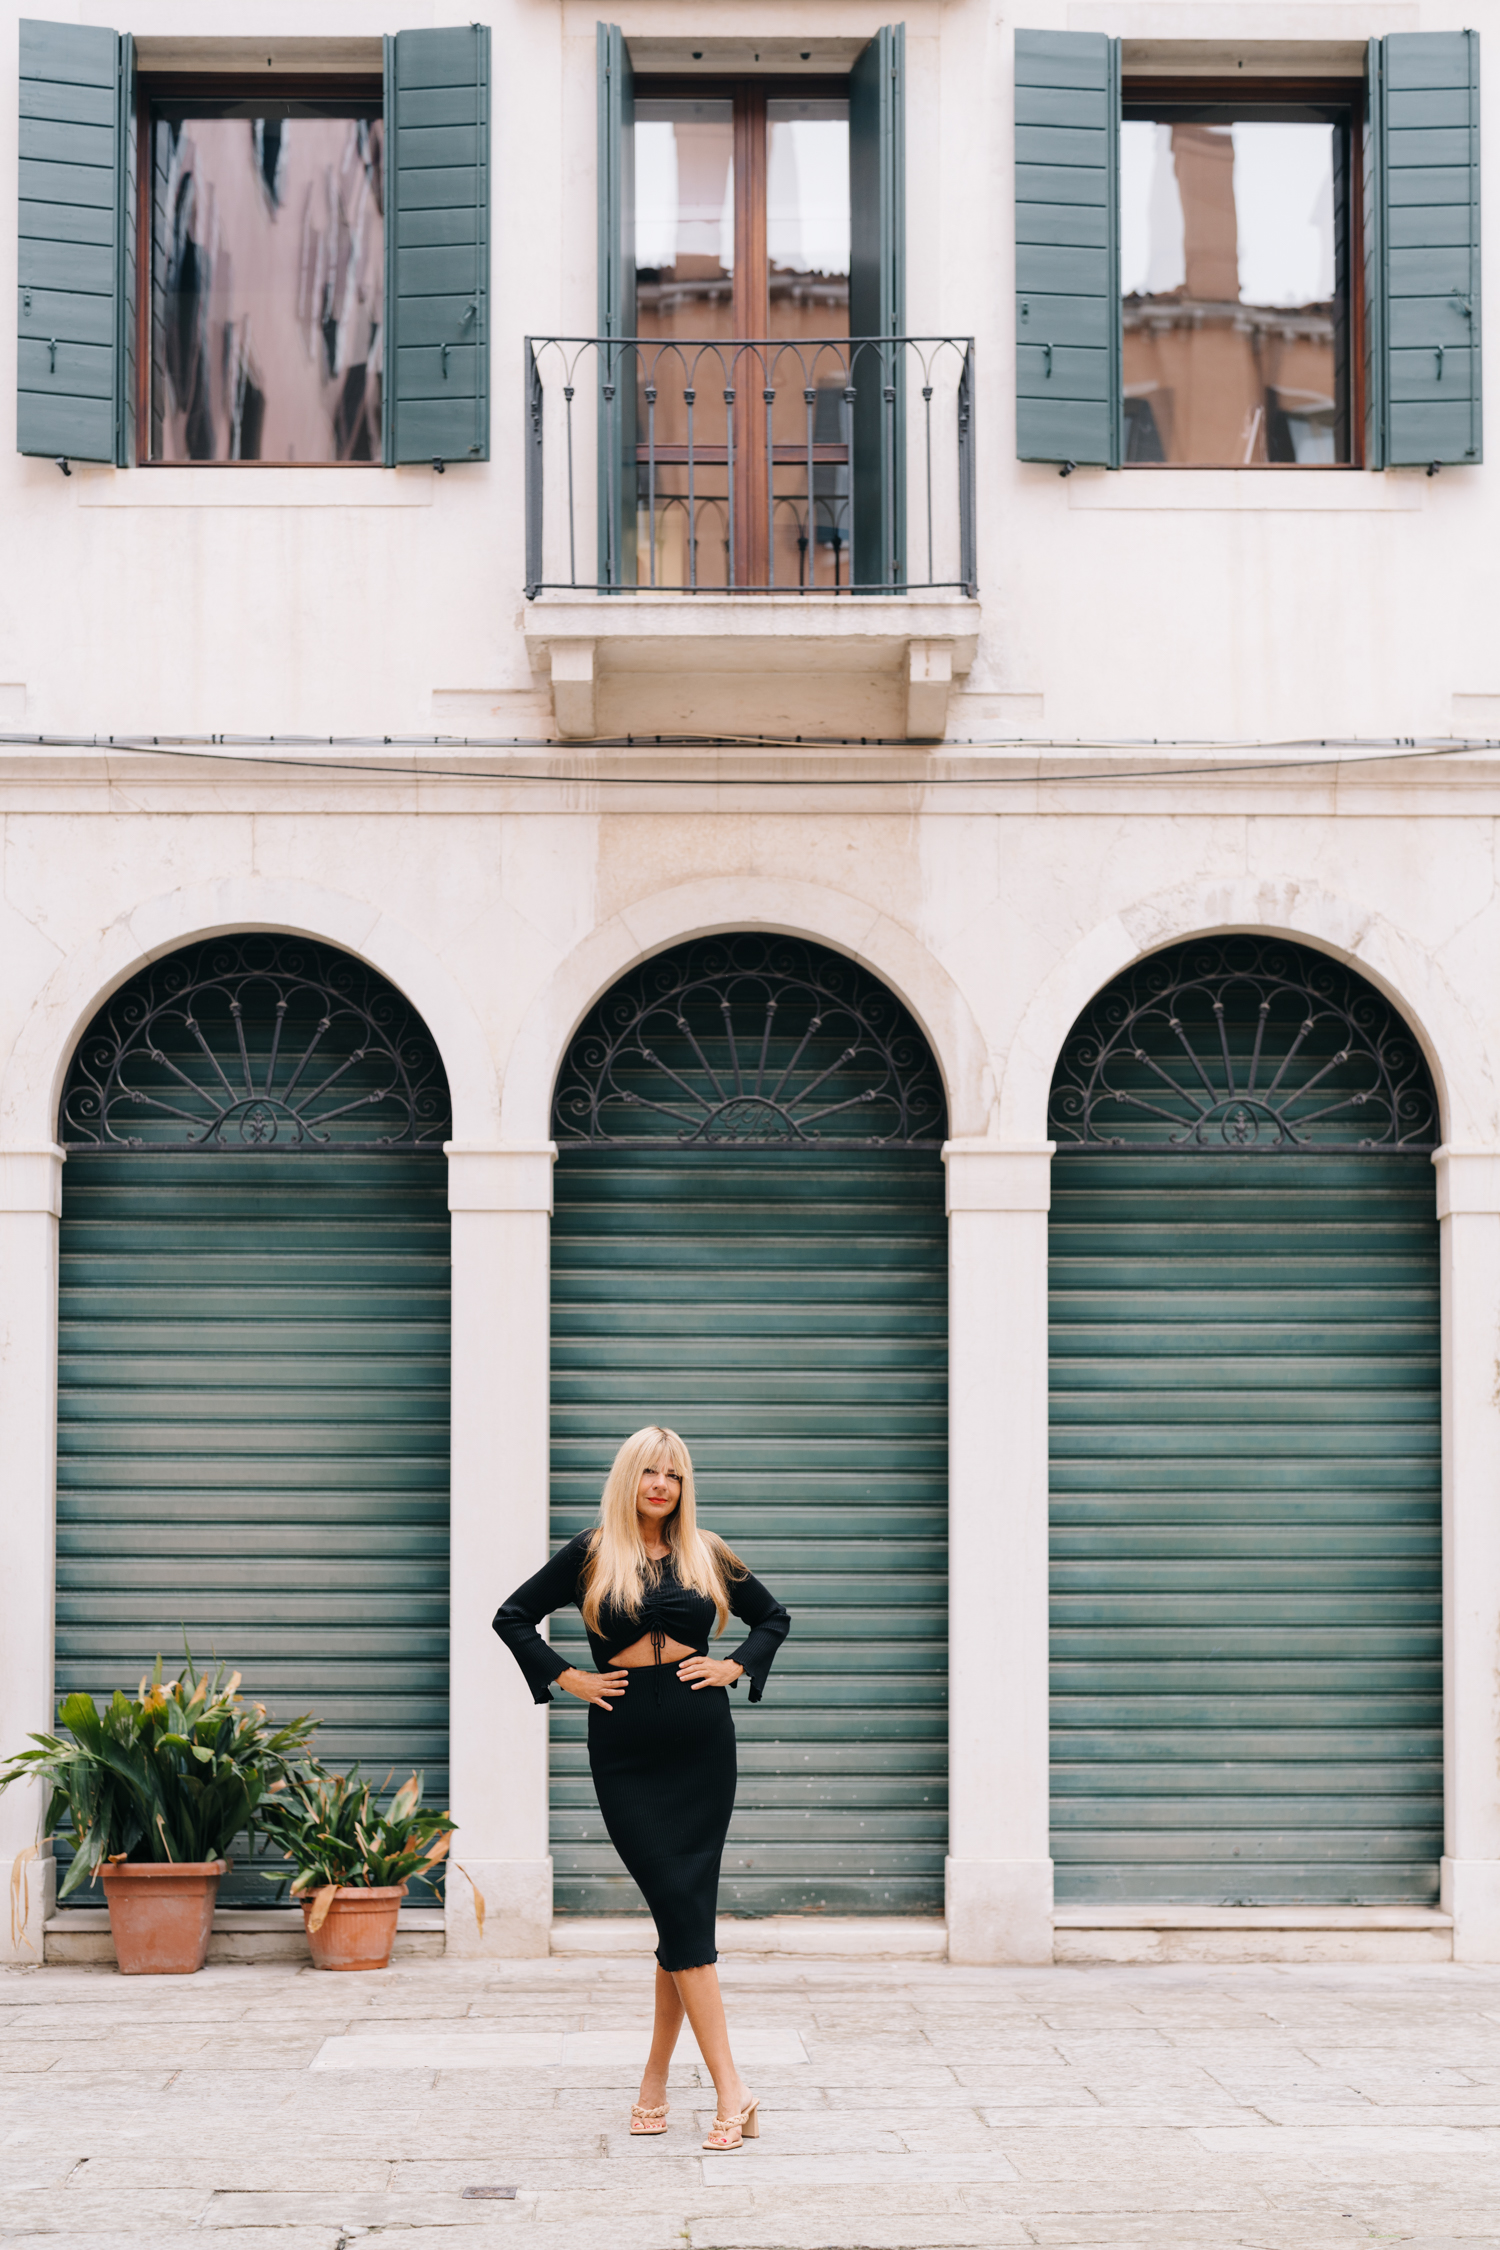 Hire a freelance photographer in Venice, Alina Indi